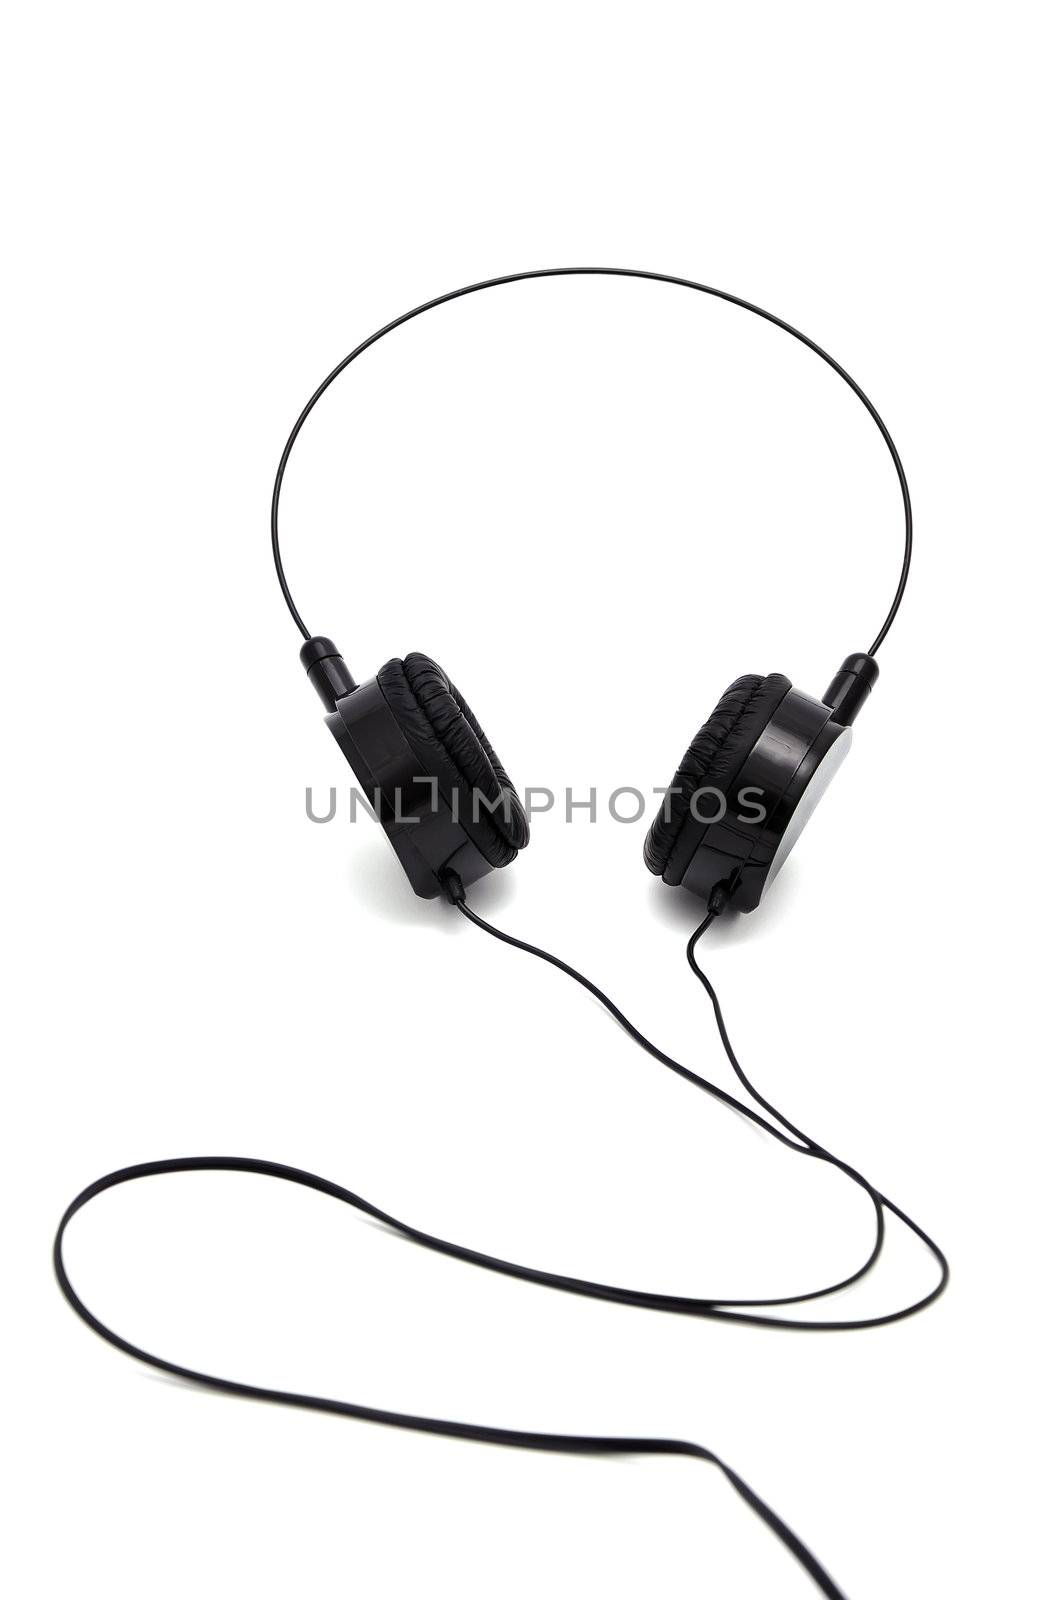 headphones by vetkit